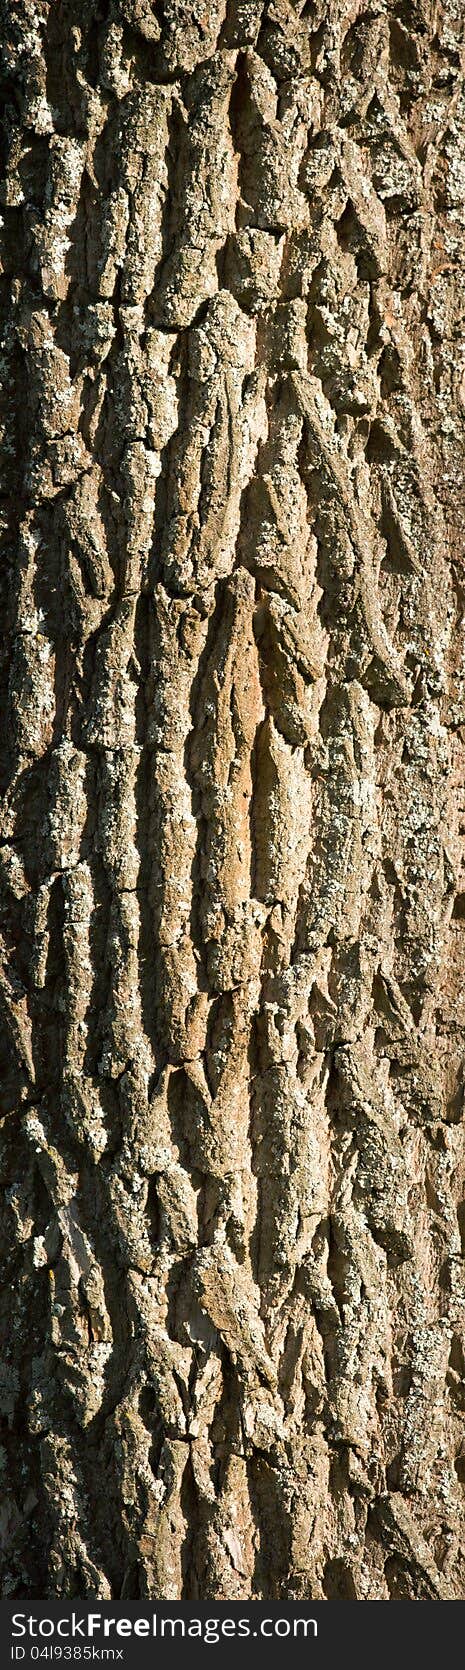 Texture of deciduous tree bark under sunlight close-up view. Texture of deciduous tree bark under sunlight close-up view